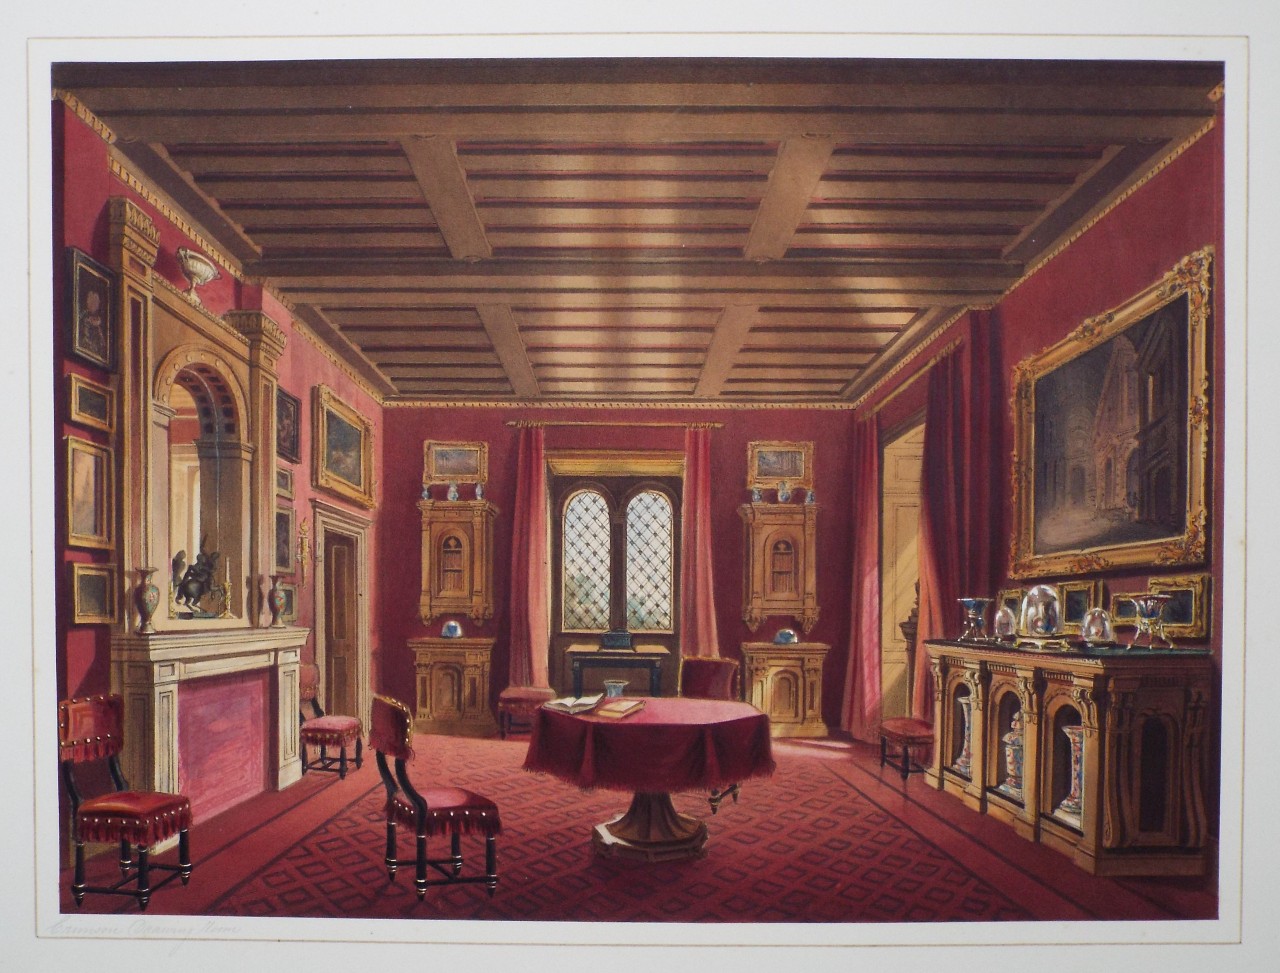 Chromo-lithograph - The Crimson Drawing Room. - Richardson